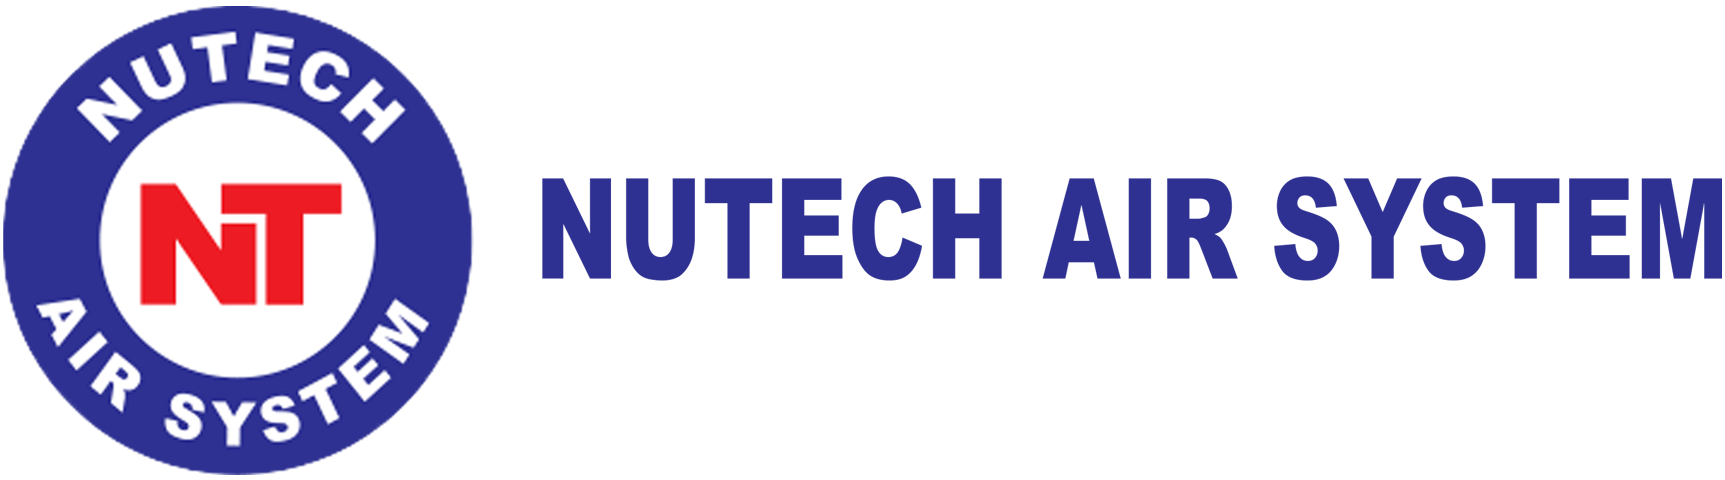 Nutech Air System Logo